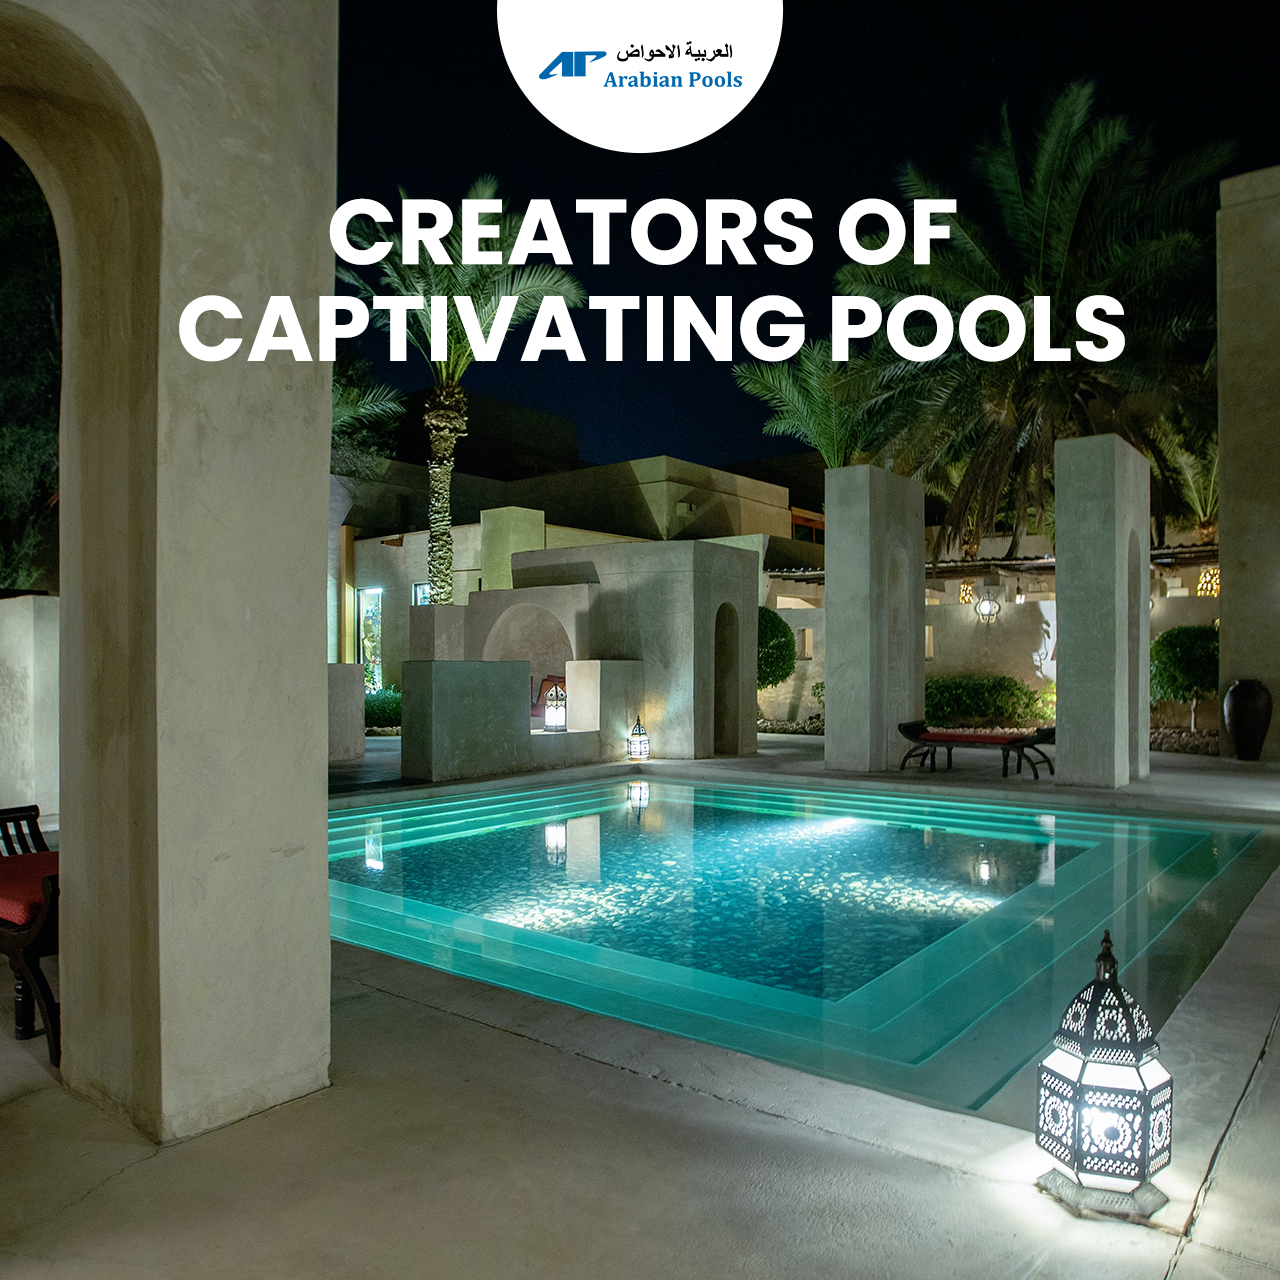 Arabian pools : Swimming Pool Contractors UAE